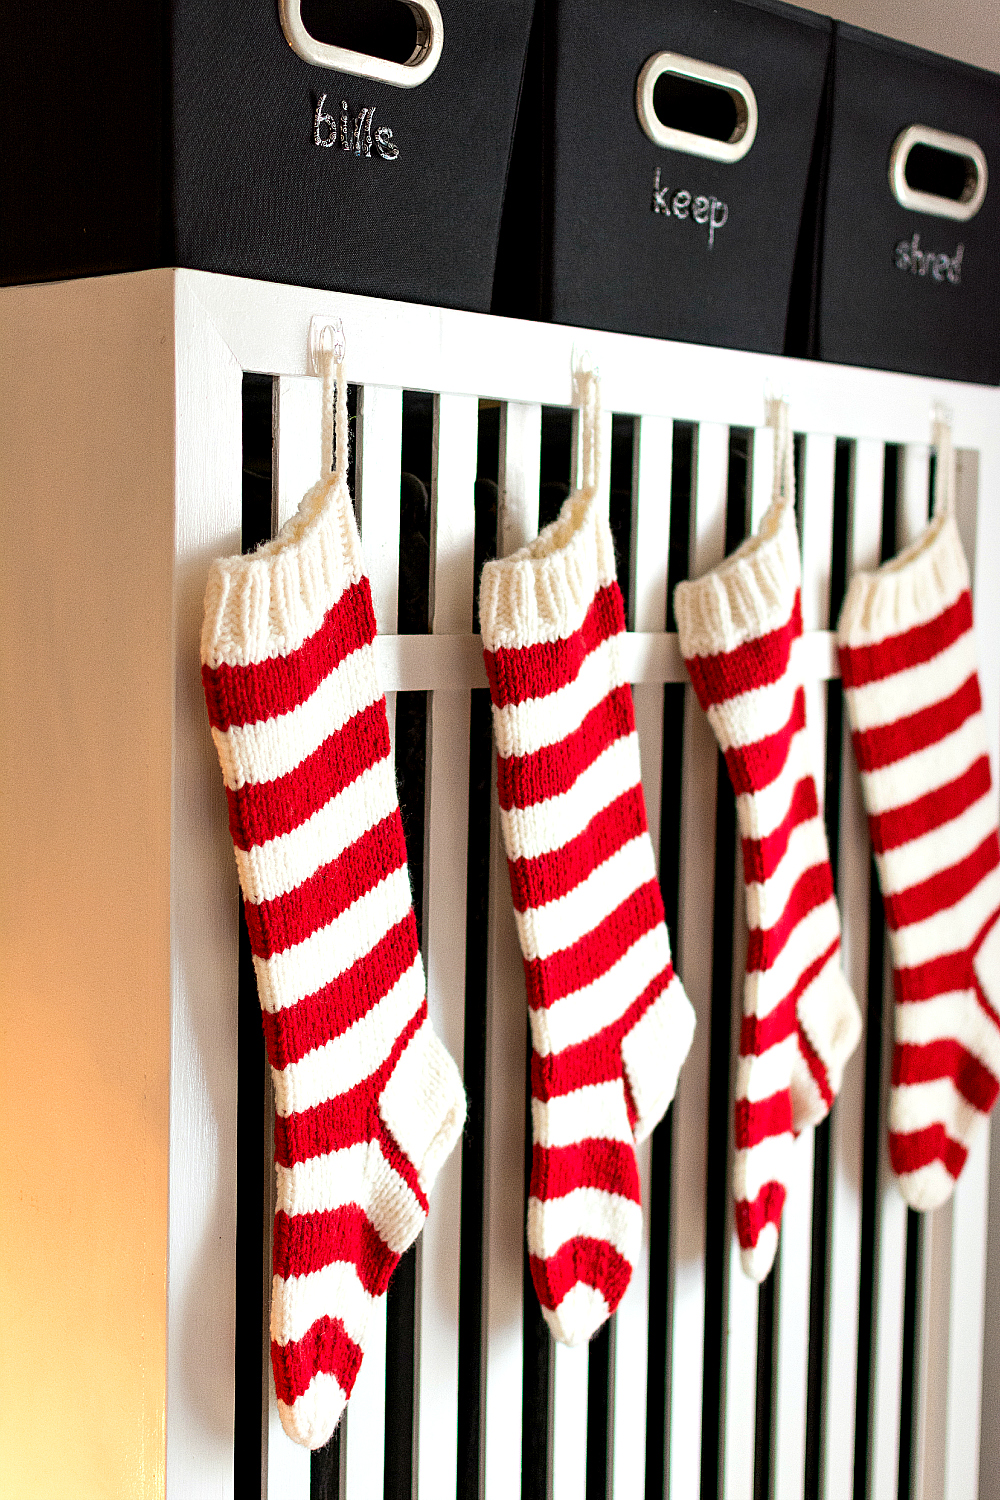 Christmas-Mantel-Red-White-Striped-Stockings-Radiator Cover.jpg 1